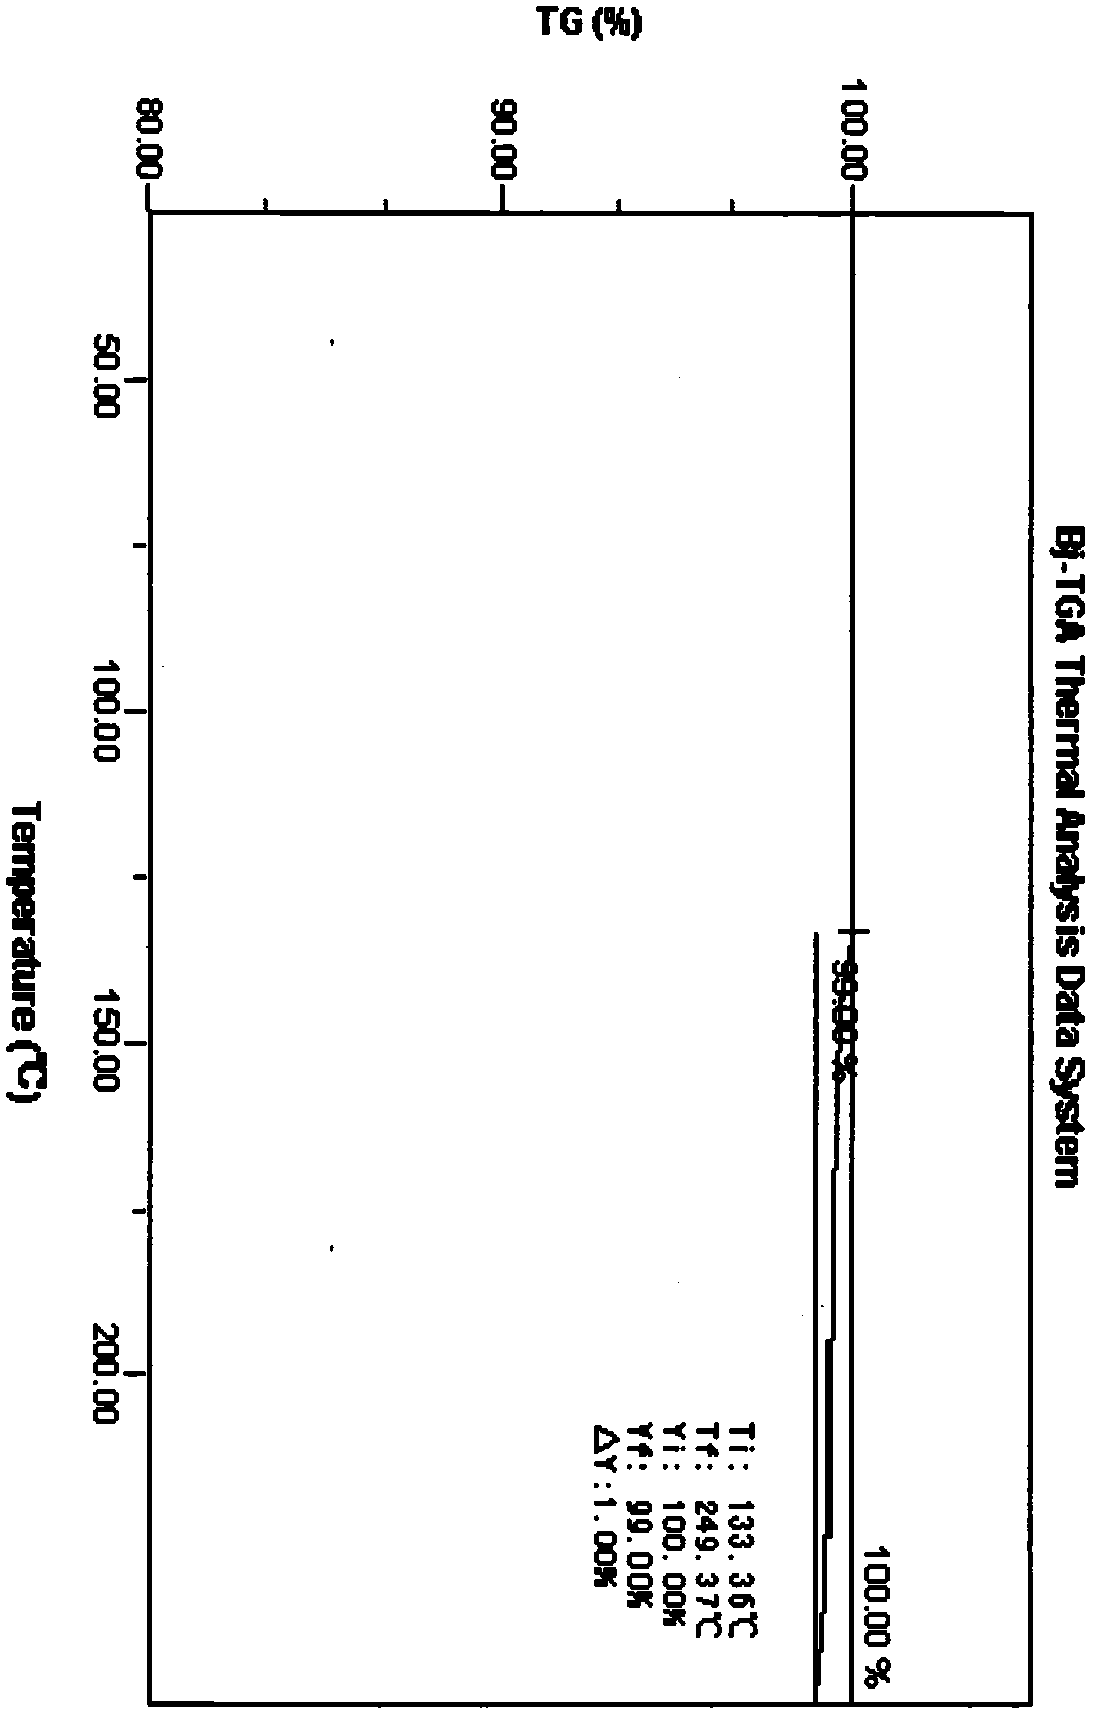 BTK inhibitor polymorph and preparation method thereof